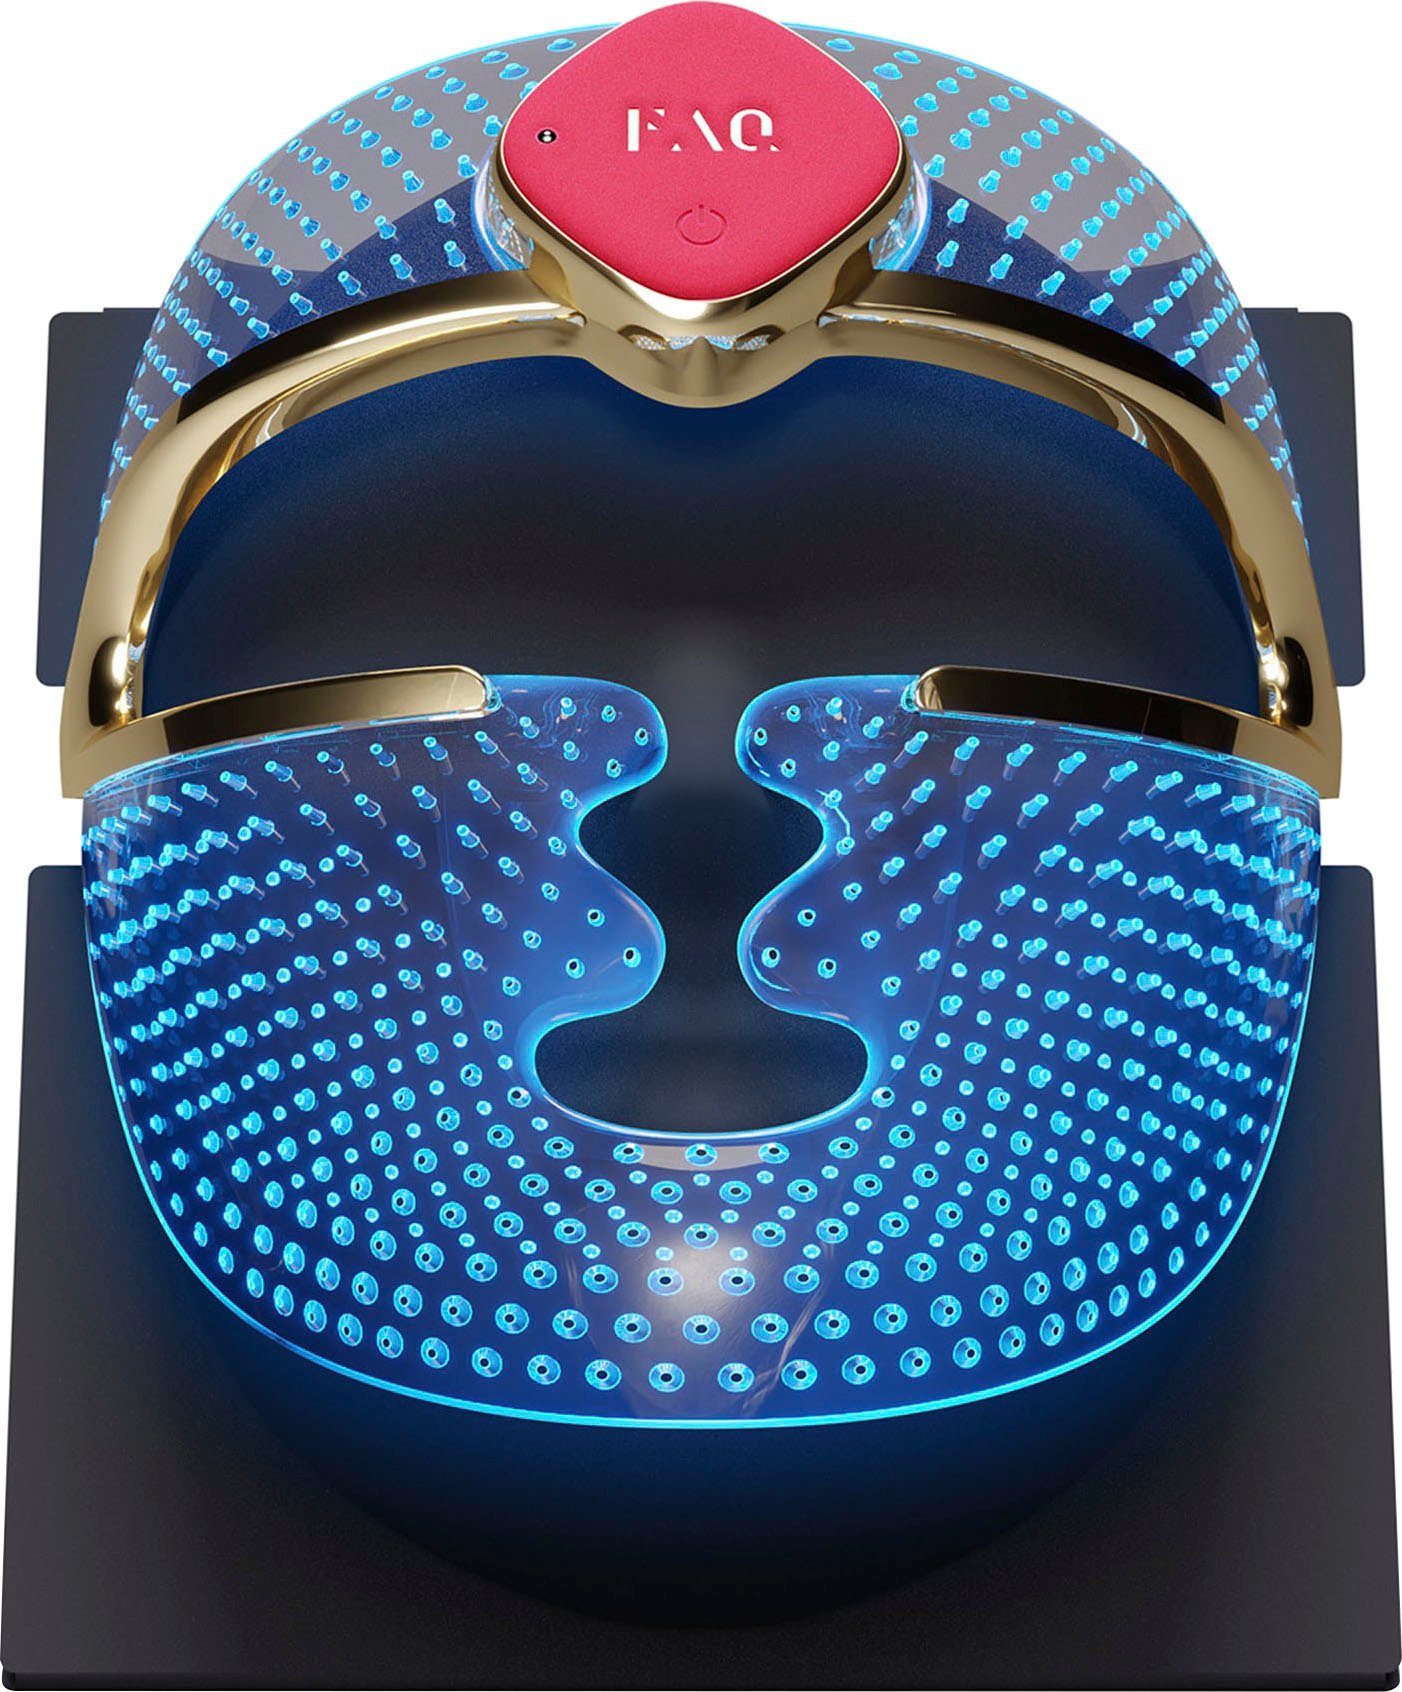 FAQ™ Mikrodermabrasionsgerät FAQ™ 201 Silicone LED Face Mask, LED Gesichtsmaske mit 3 Farben